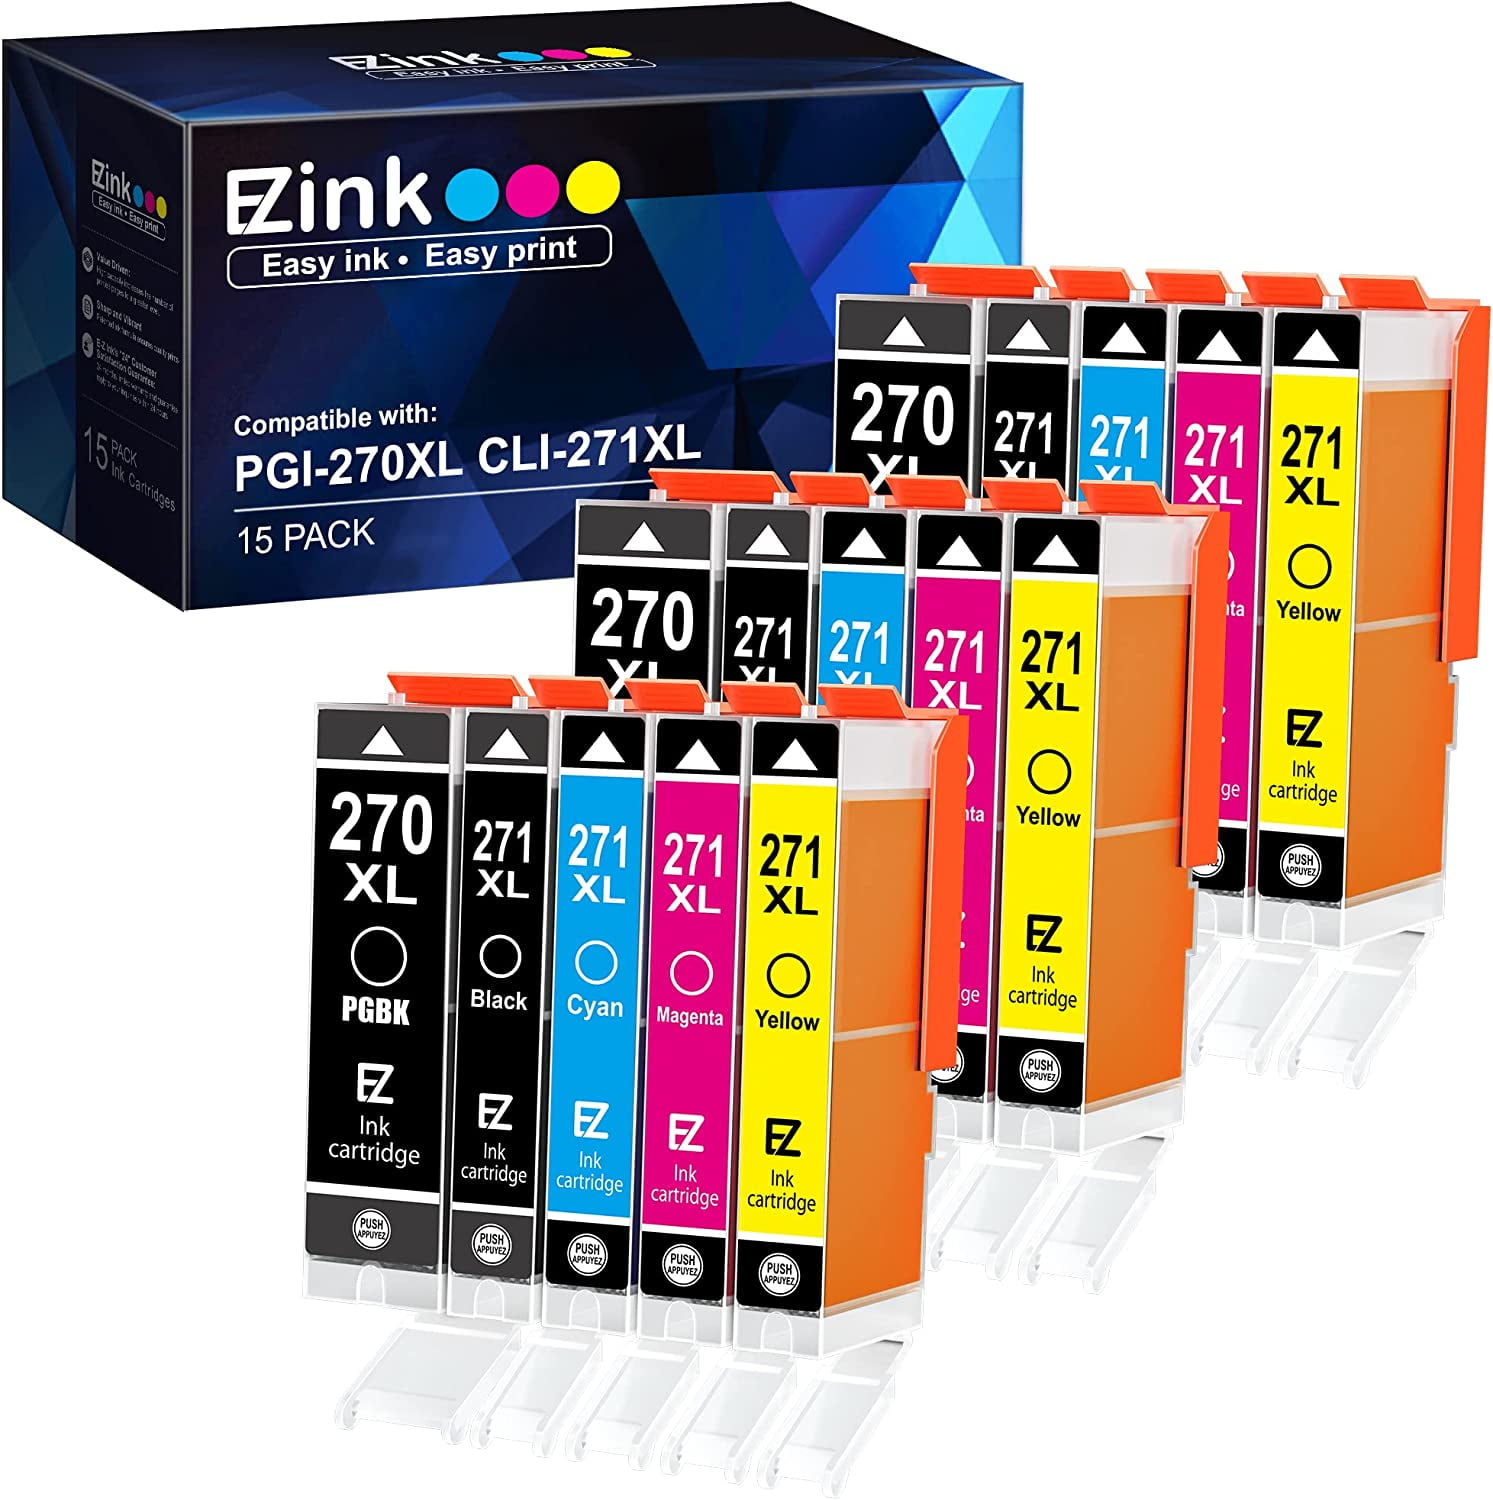 Set of ink cartridges (6x) for Canon PIXMA CLI-581 XXL,CLI-581PGBK XXL